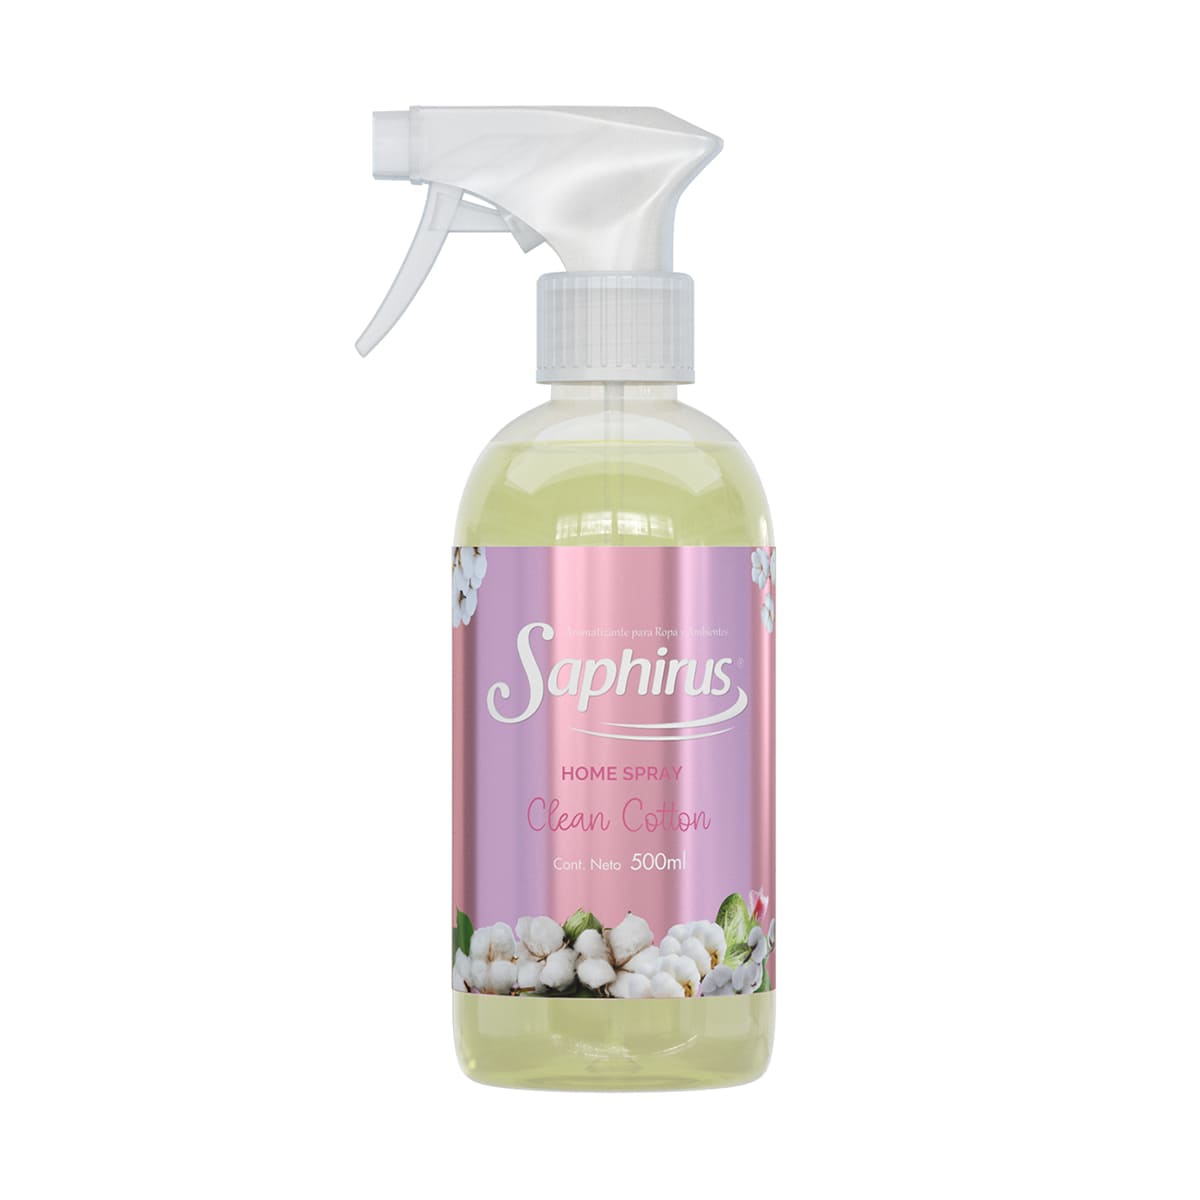 Home Spray Clean Cotton - Saphirus